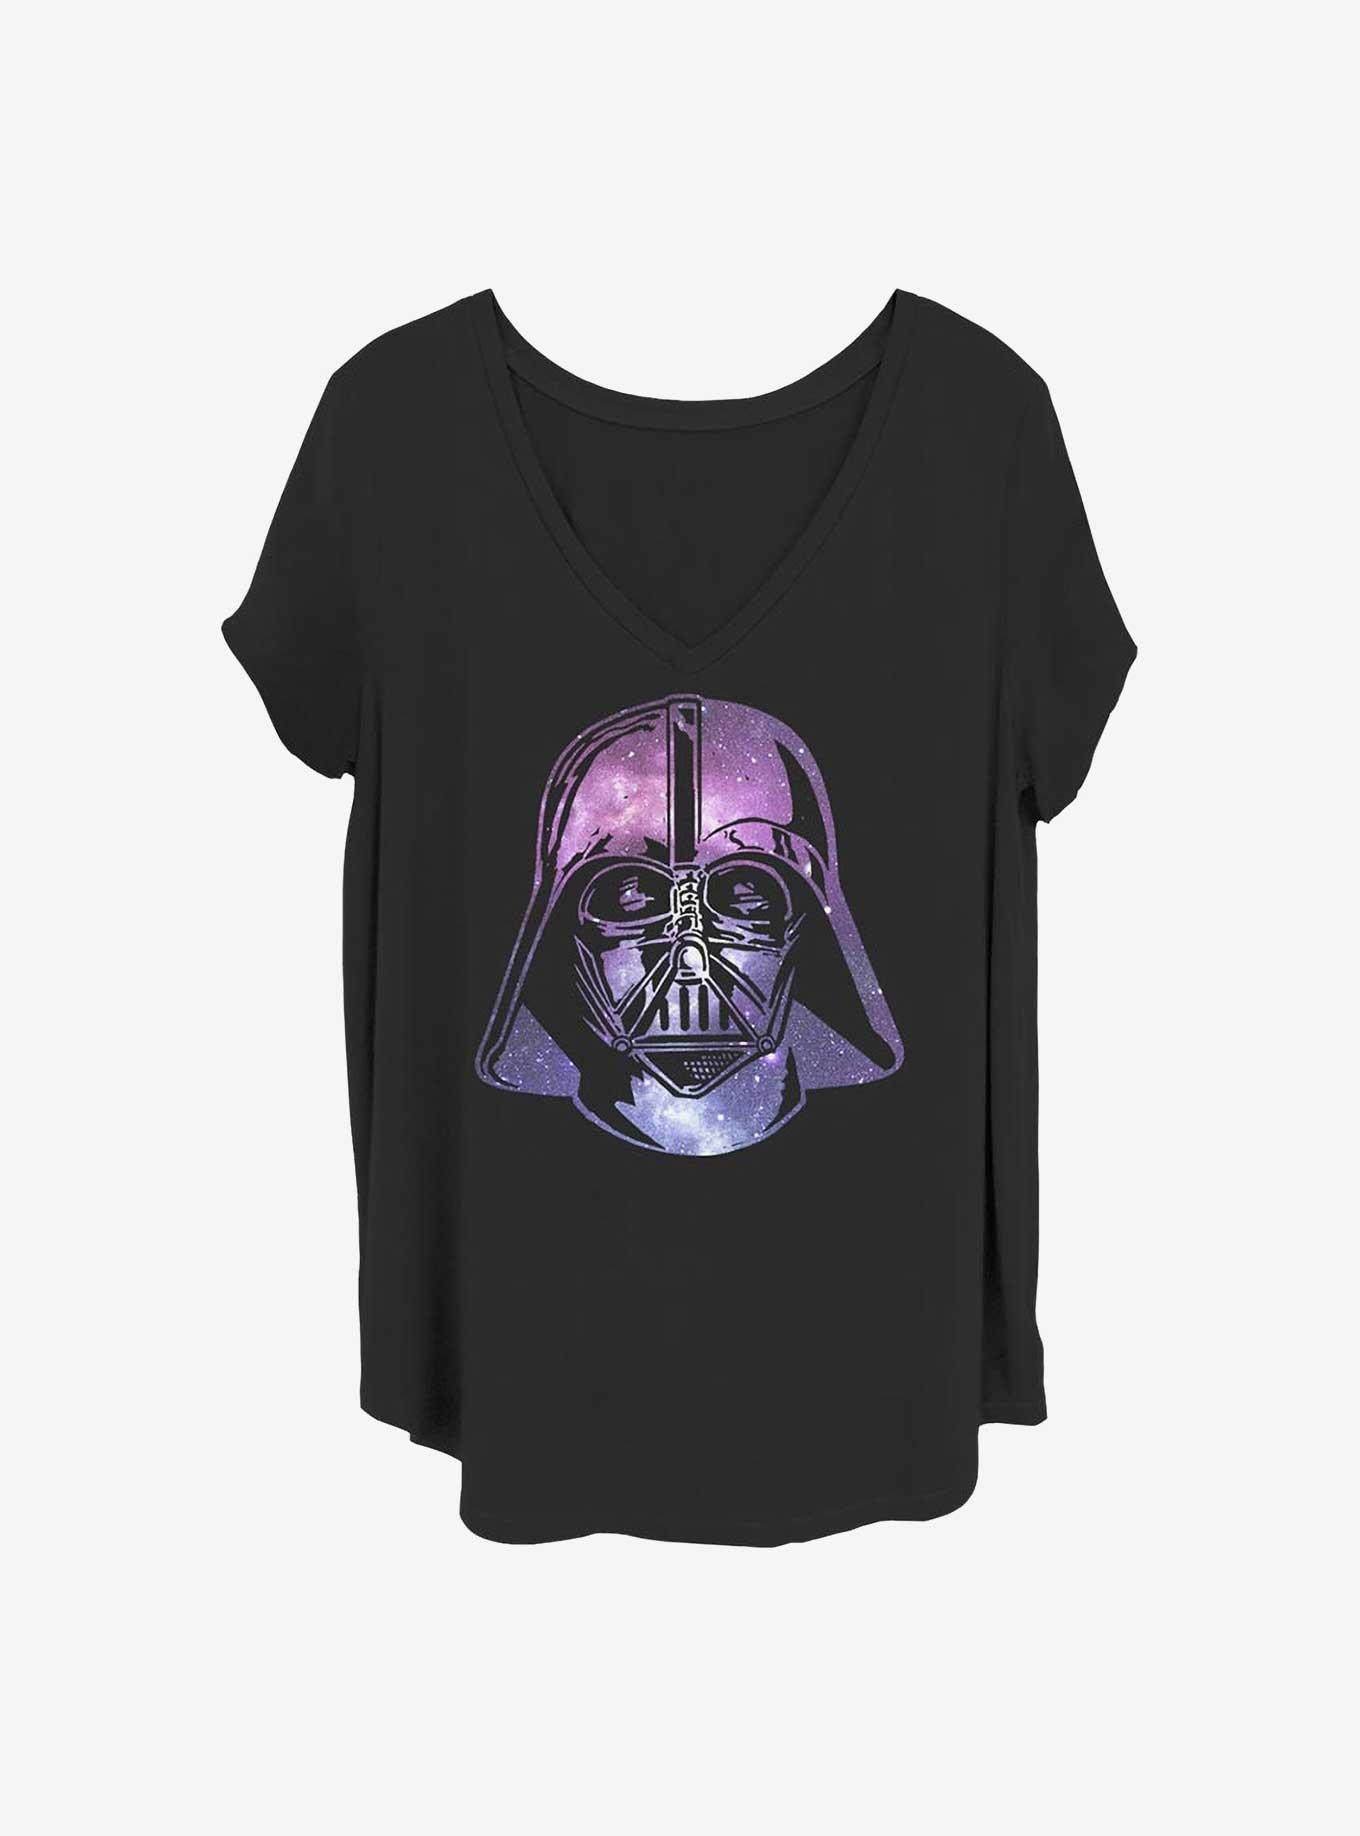 Star Wars Vader Space Helmet Girls T-Shirt Plus